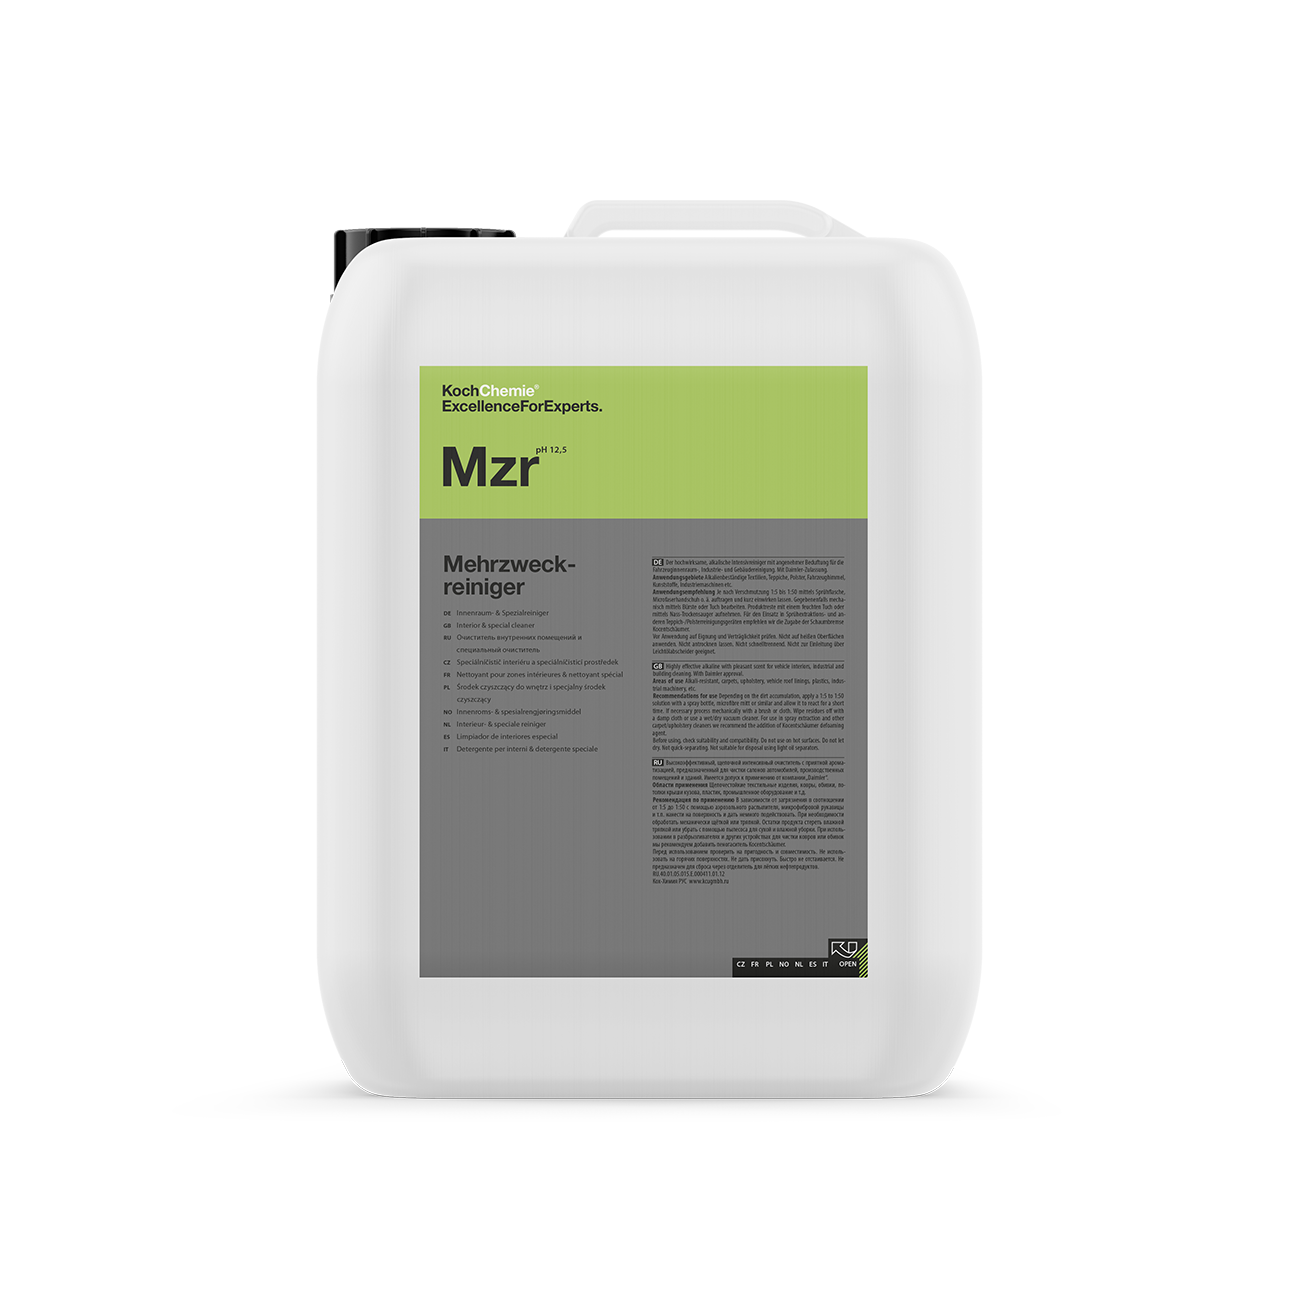 Koch-Chemie MZR Interior Cleaner, 11 kg